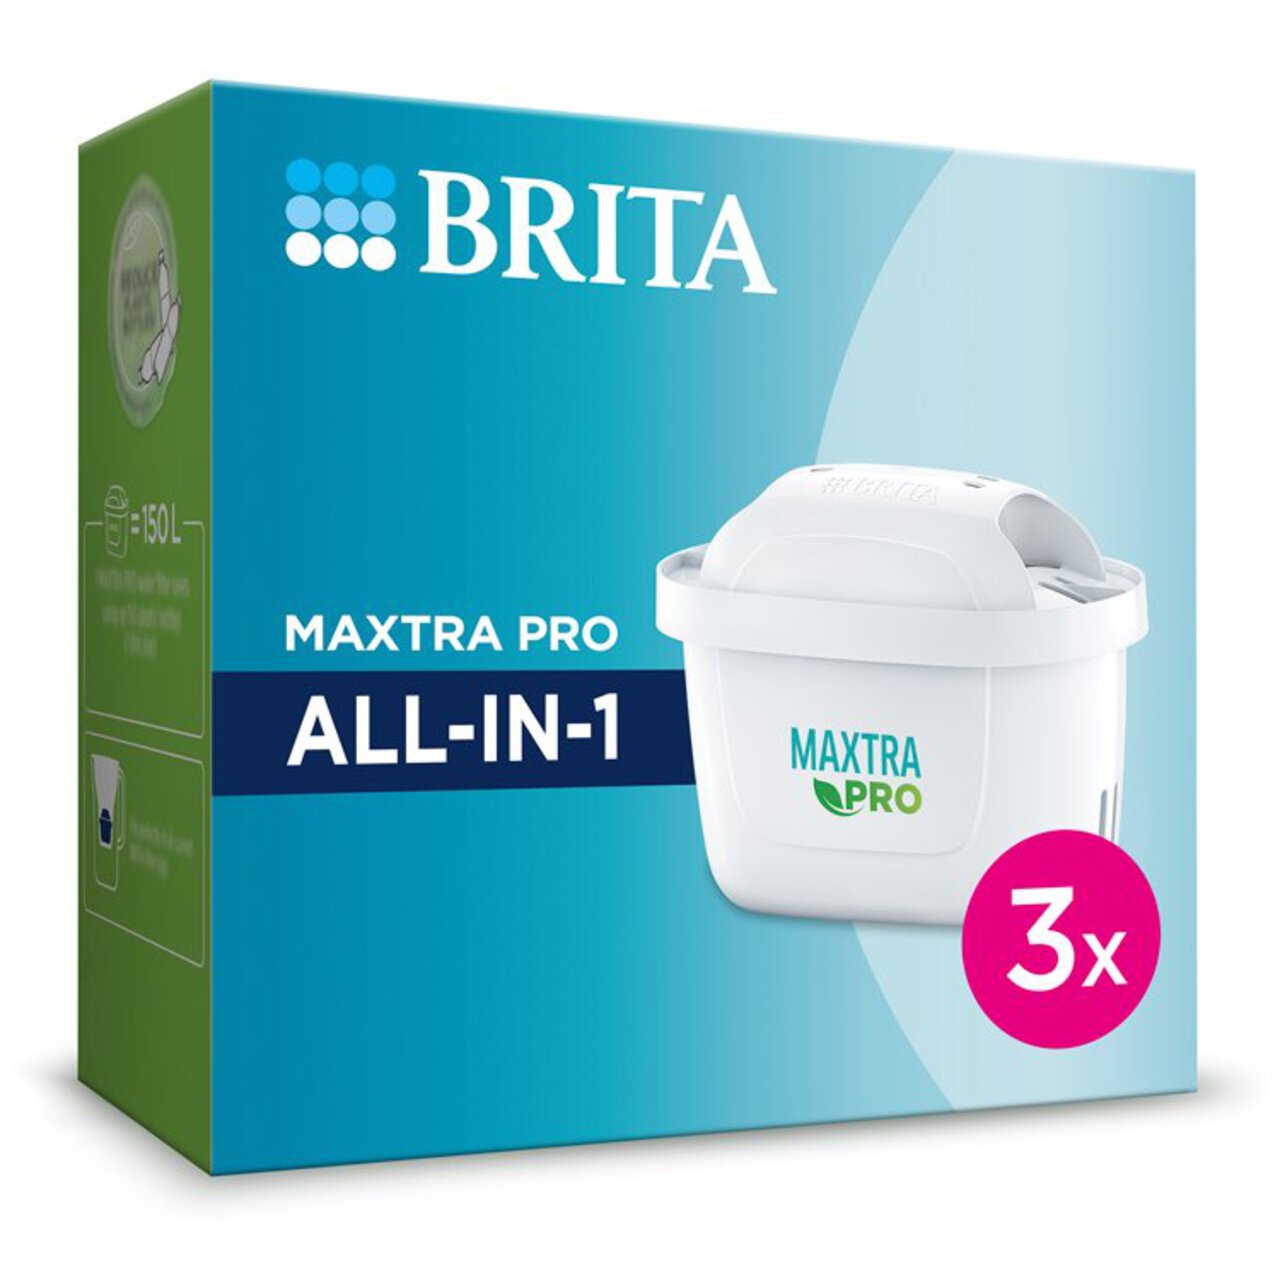 BRITA MAXTRA PRO All-in-1 Water Filter - 3 pack 3 per pack